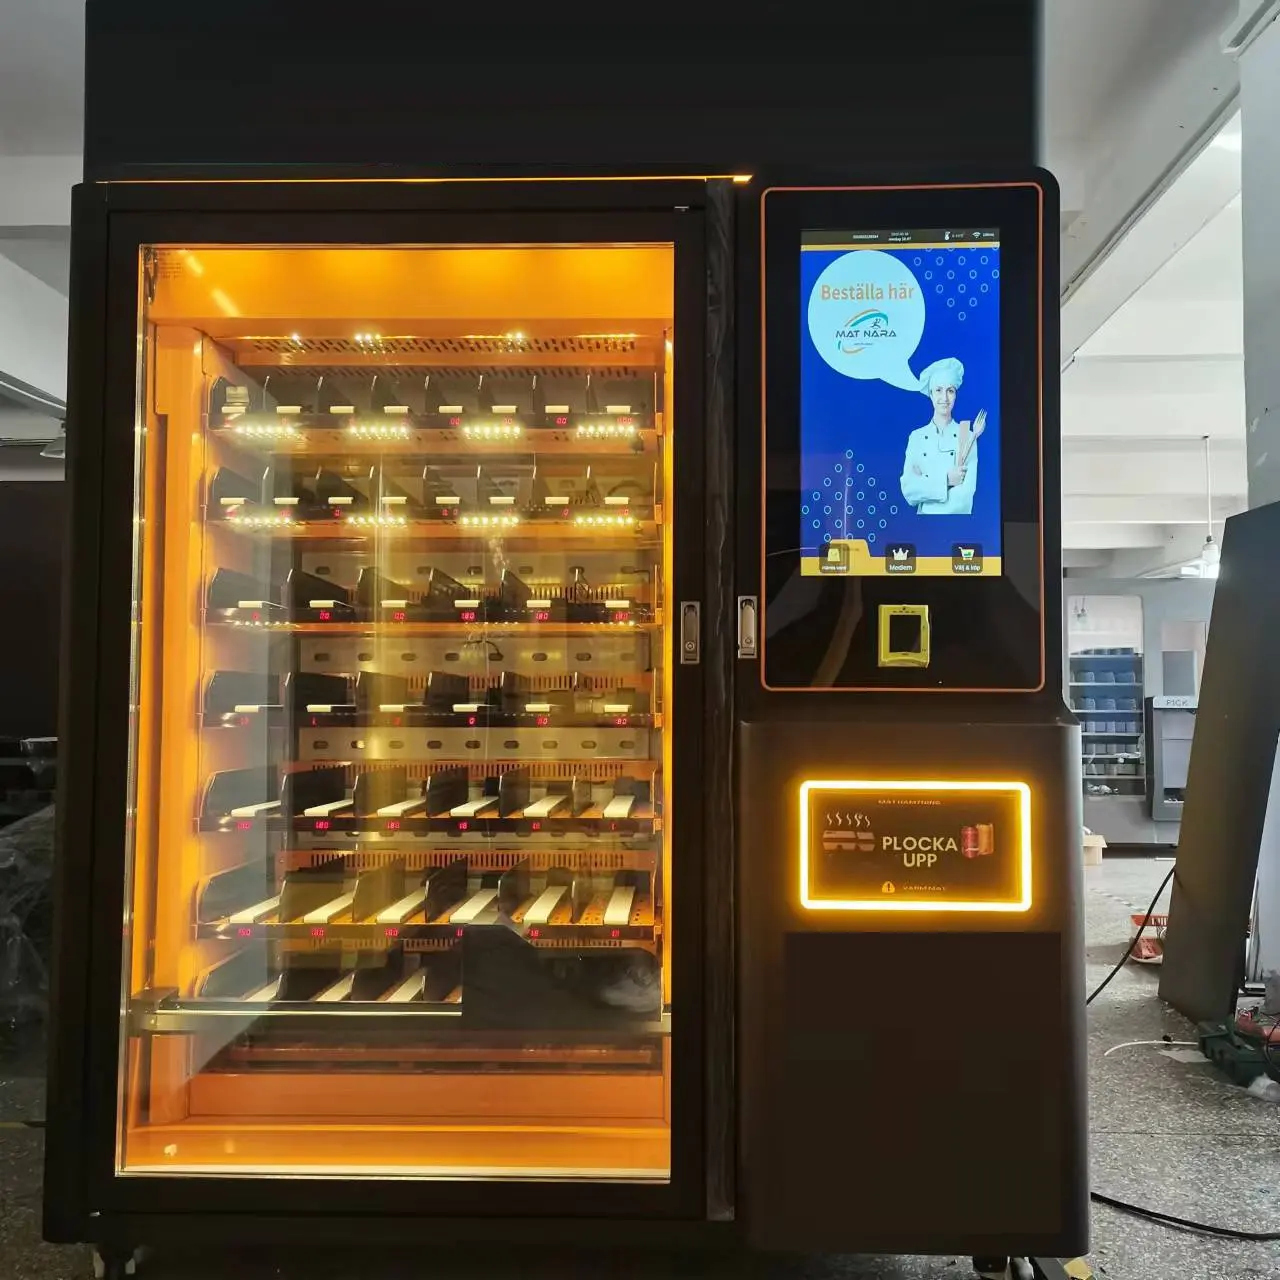 Eingebaute Mikrowellen heizung Touchscreen Lunchbox Vendlife Verkaufs automat